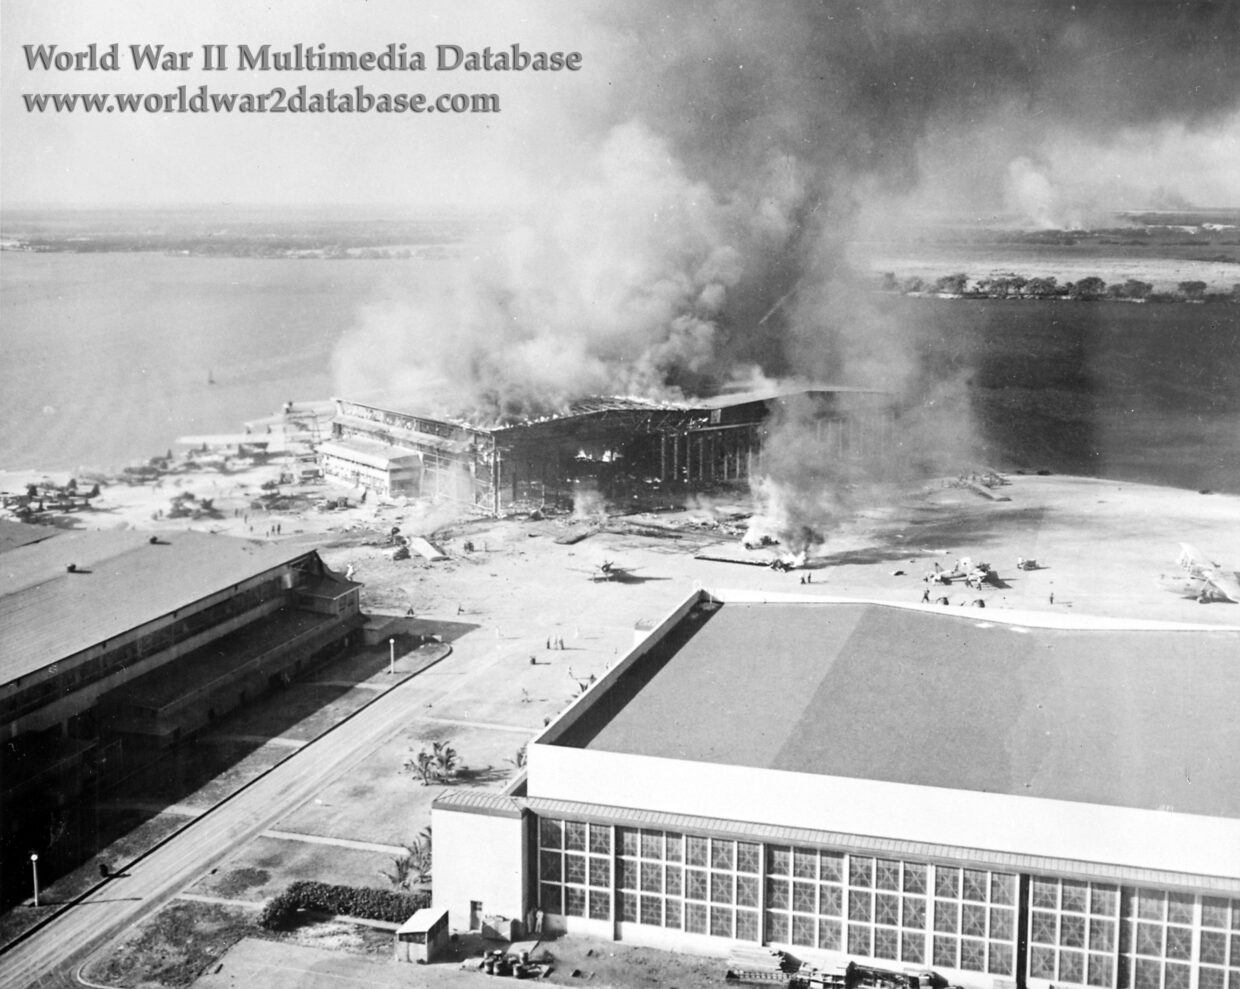 Ford Island Naval Air Station‘s Hangar 6 Burns After Air Attack